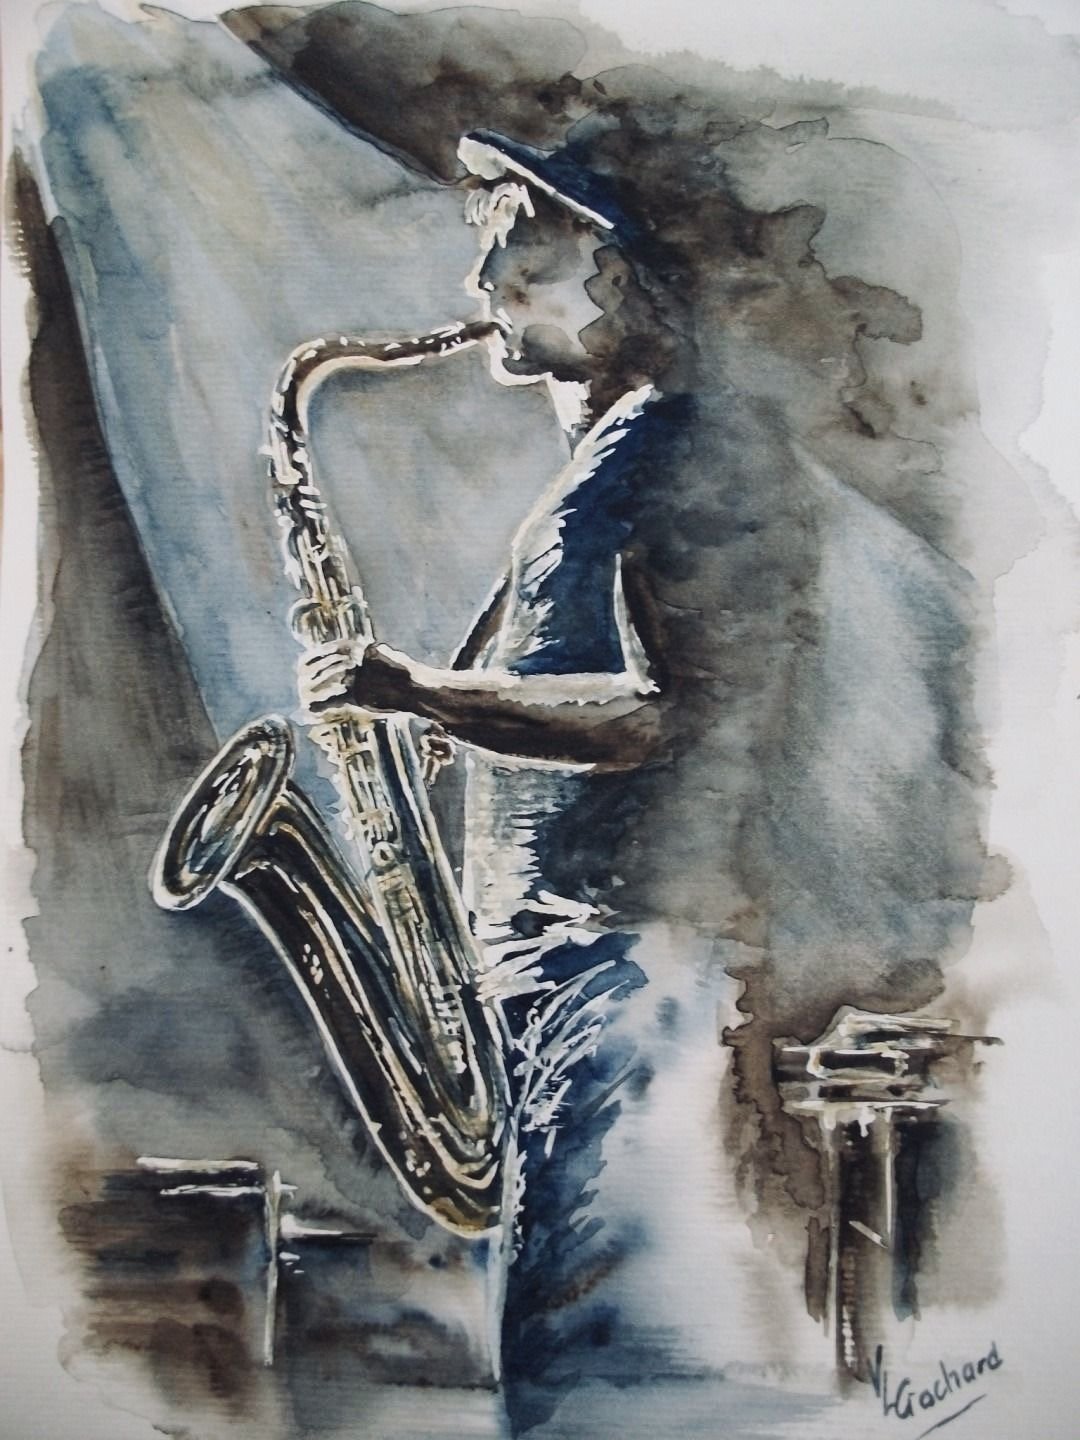 Саксофон 70. Картина Пикассо саксофонист. Саксофонист в джазе живопись. Картина саксофонист/саксофонистка. Саксофонист уличный музыкант живопись.